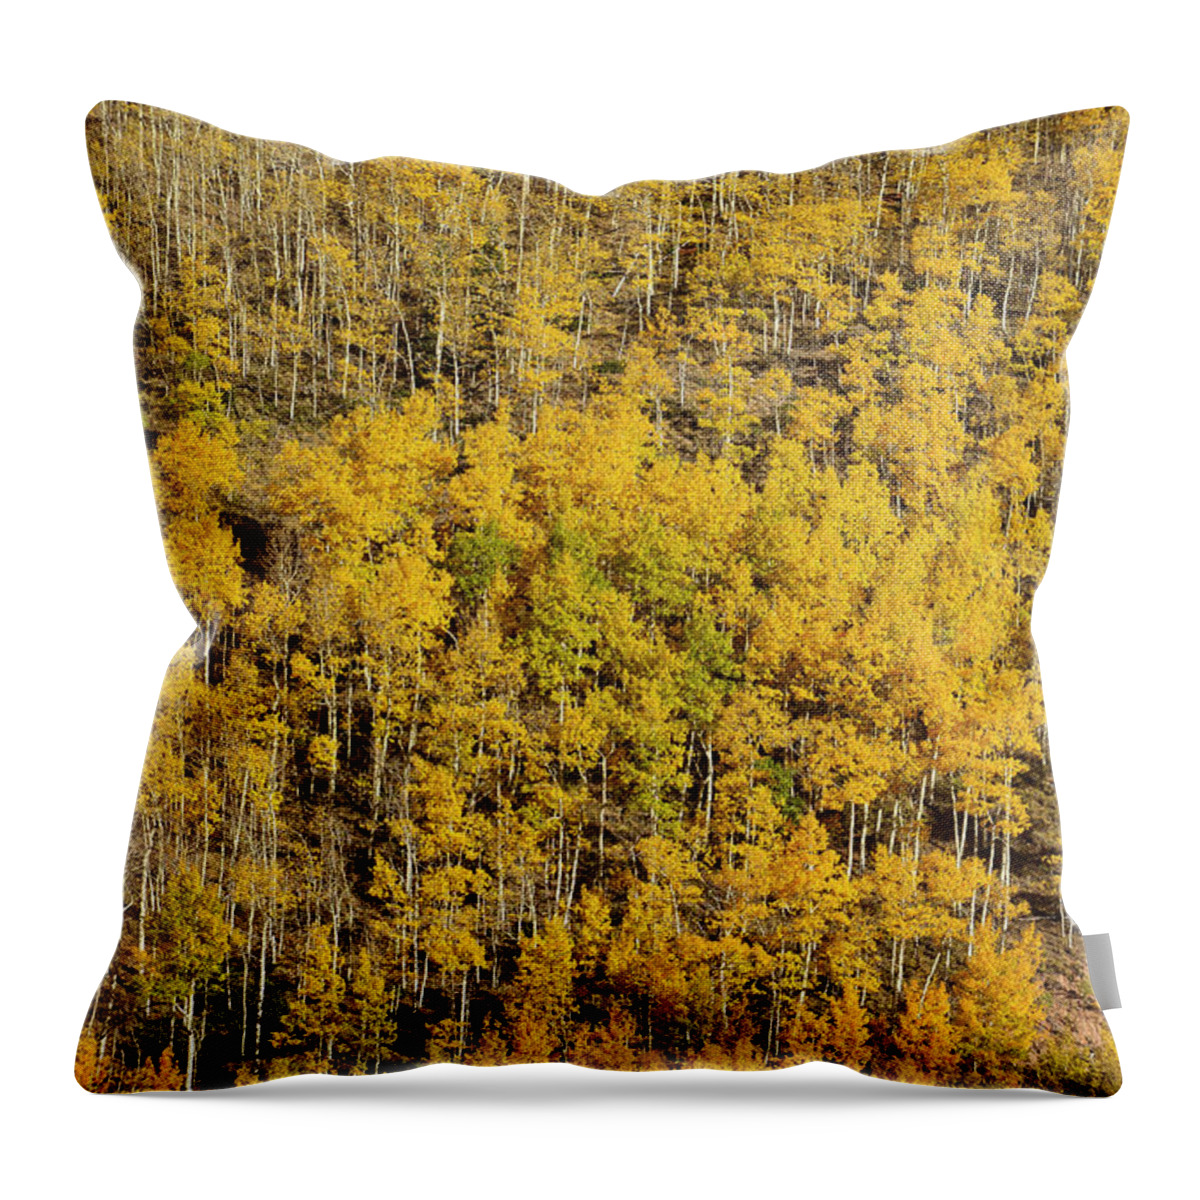 Aspen Throw Pillow featuring the photograph Aspen Texture by Aaron Spong